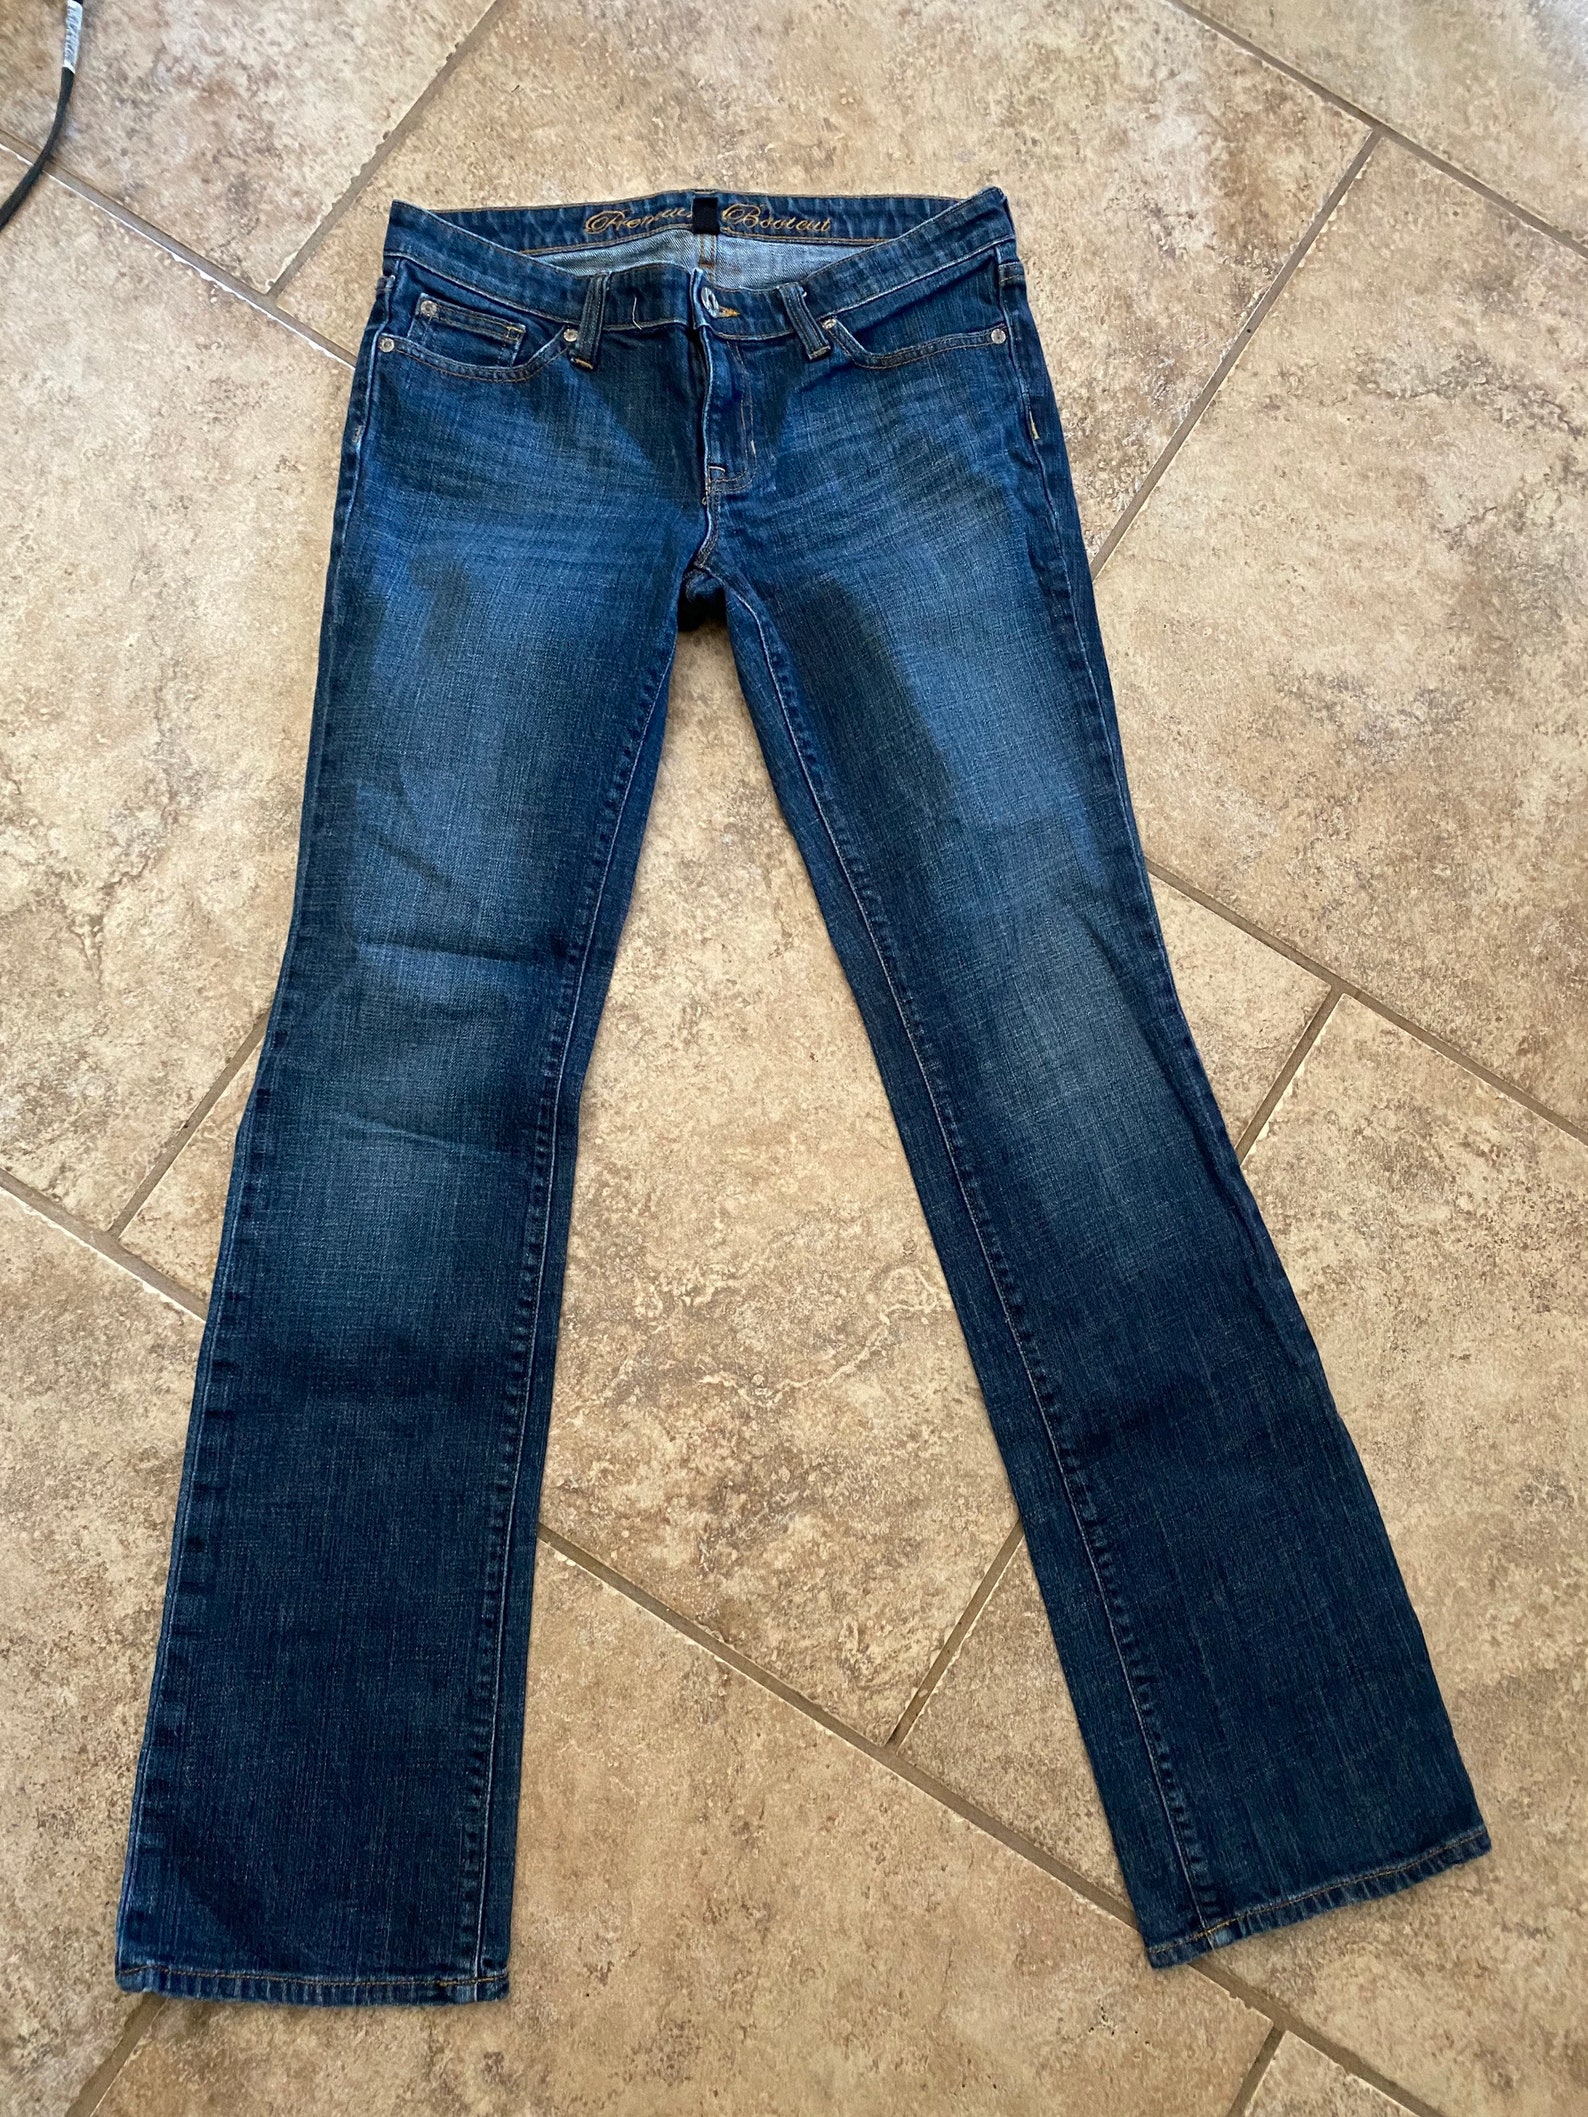 GAP 1969 Premium Bootcut 6 / 28L Womens Medium Wash Jeans | Etsy